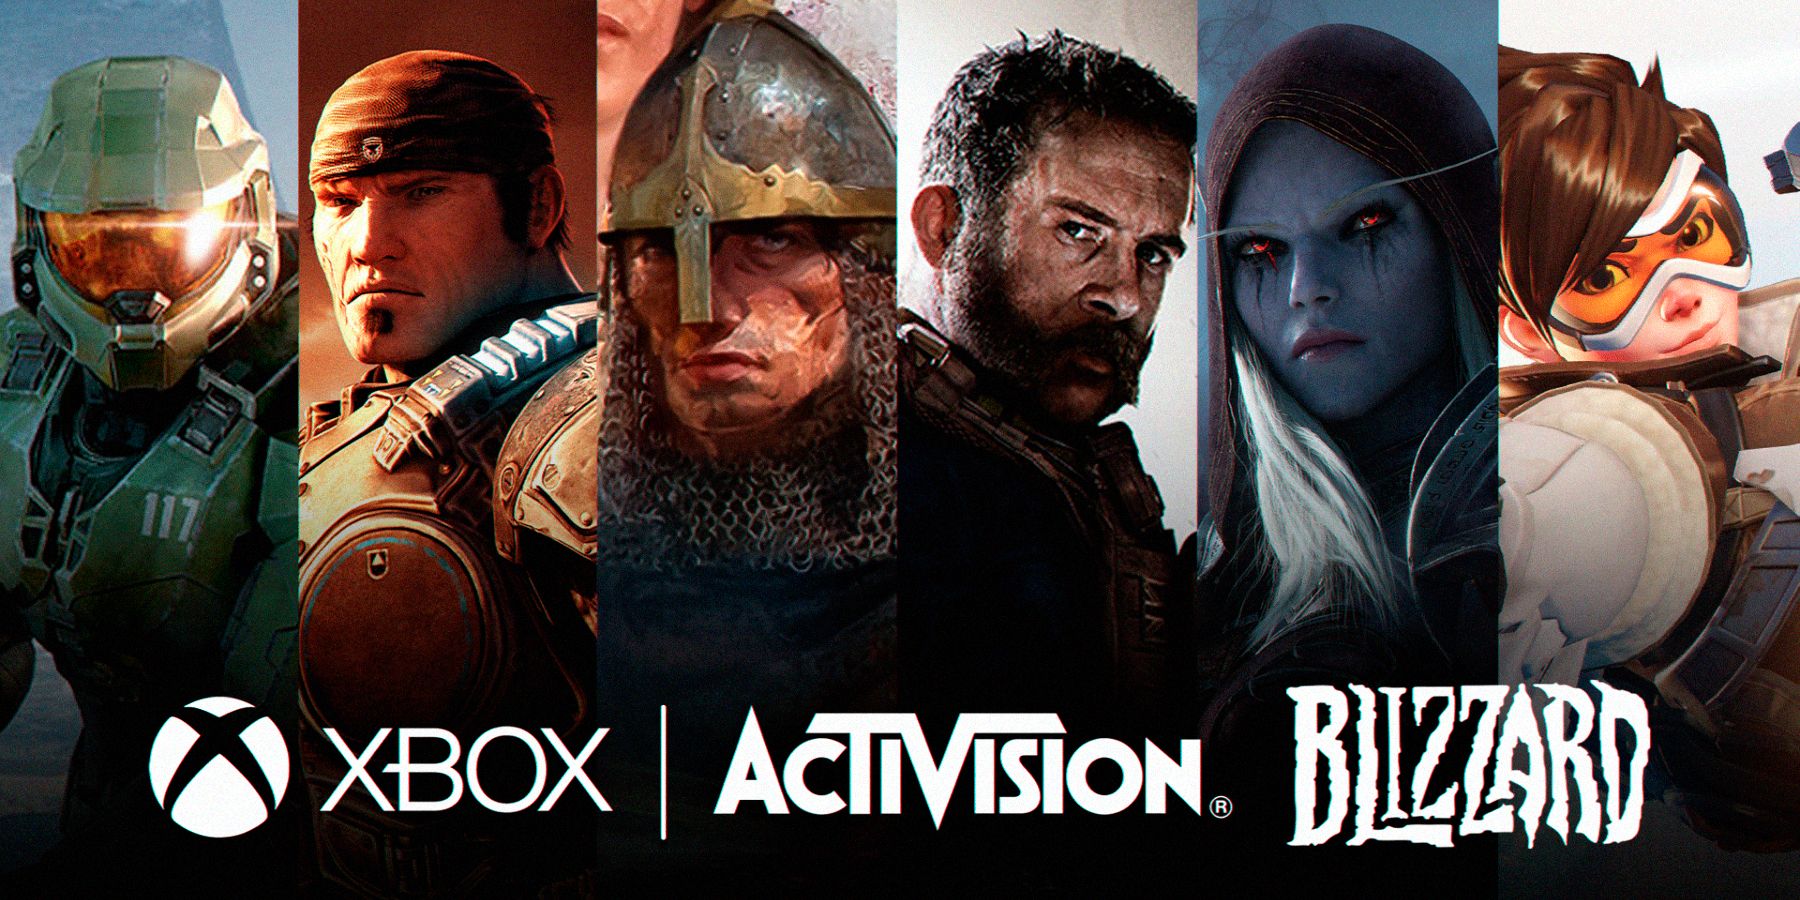 xbox activision blizzard franchises